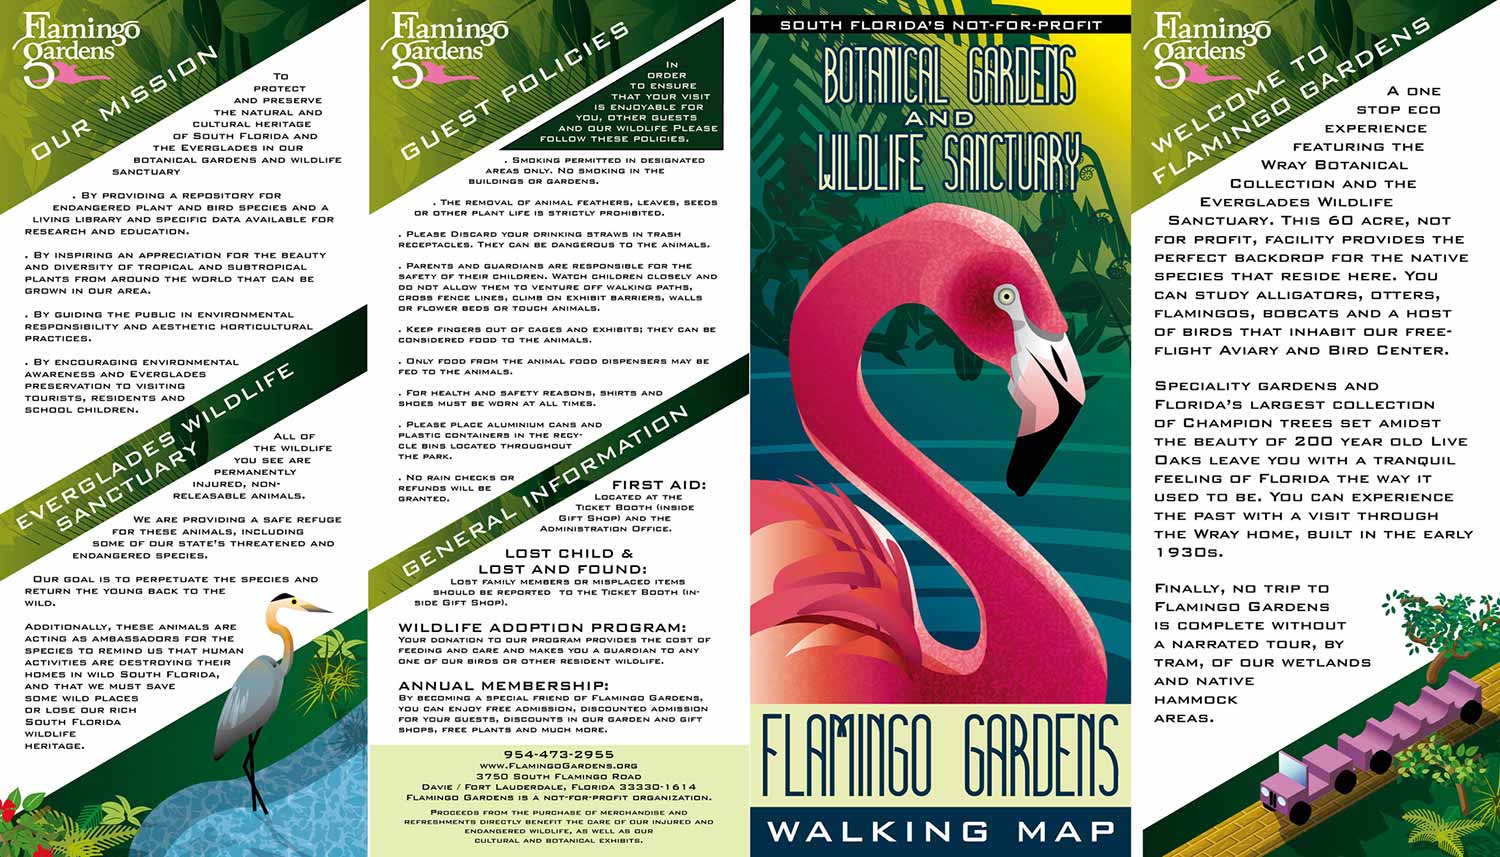 Flamingo Gardens Brochure Design and Illustration